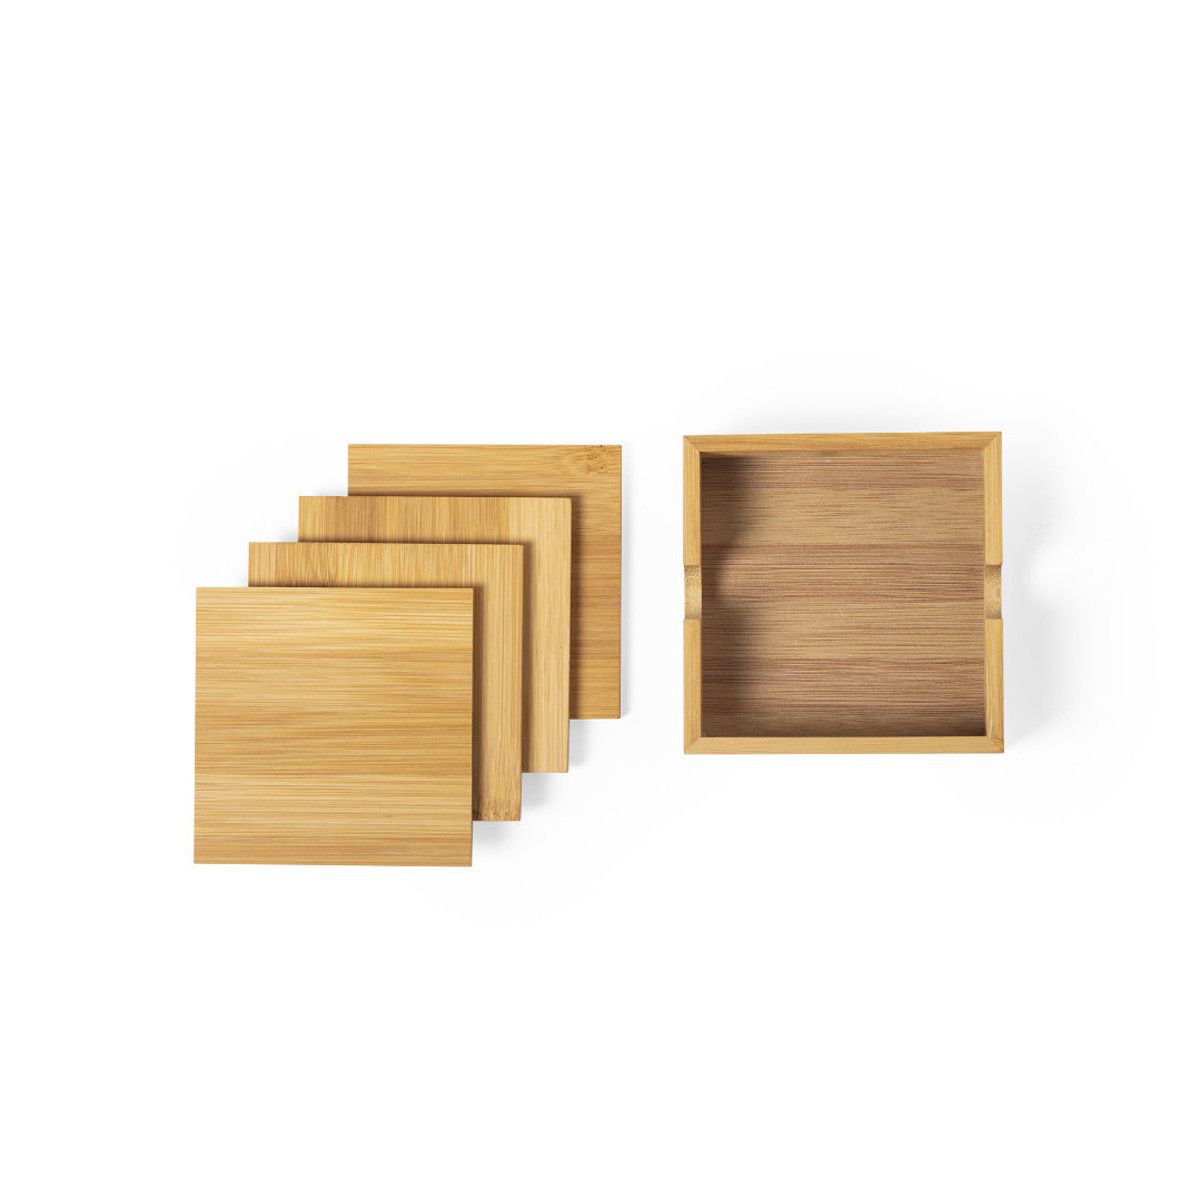 Caja de madera troquelada - Diseño personalizado a tu gusto con texto